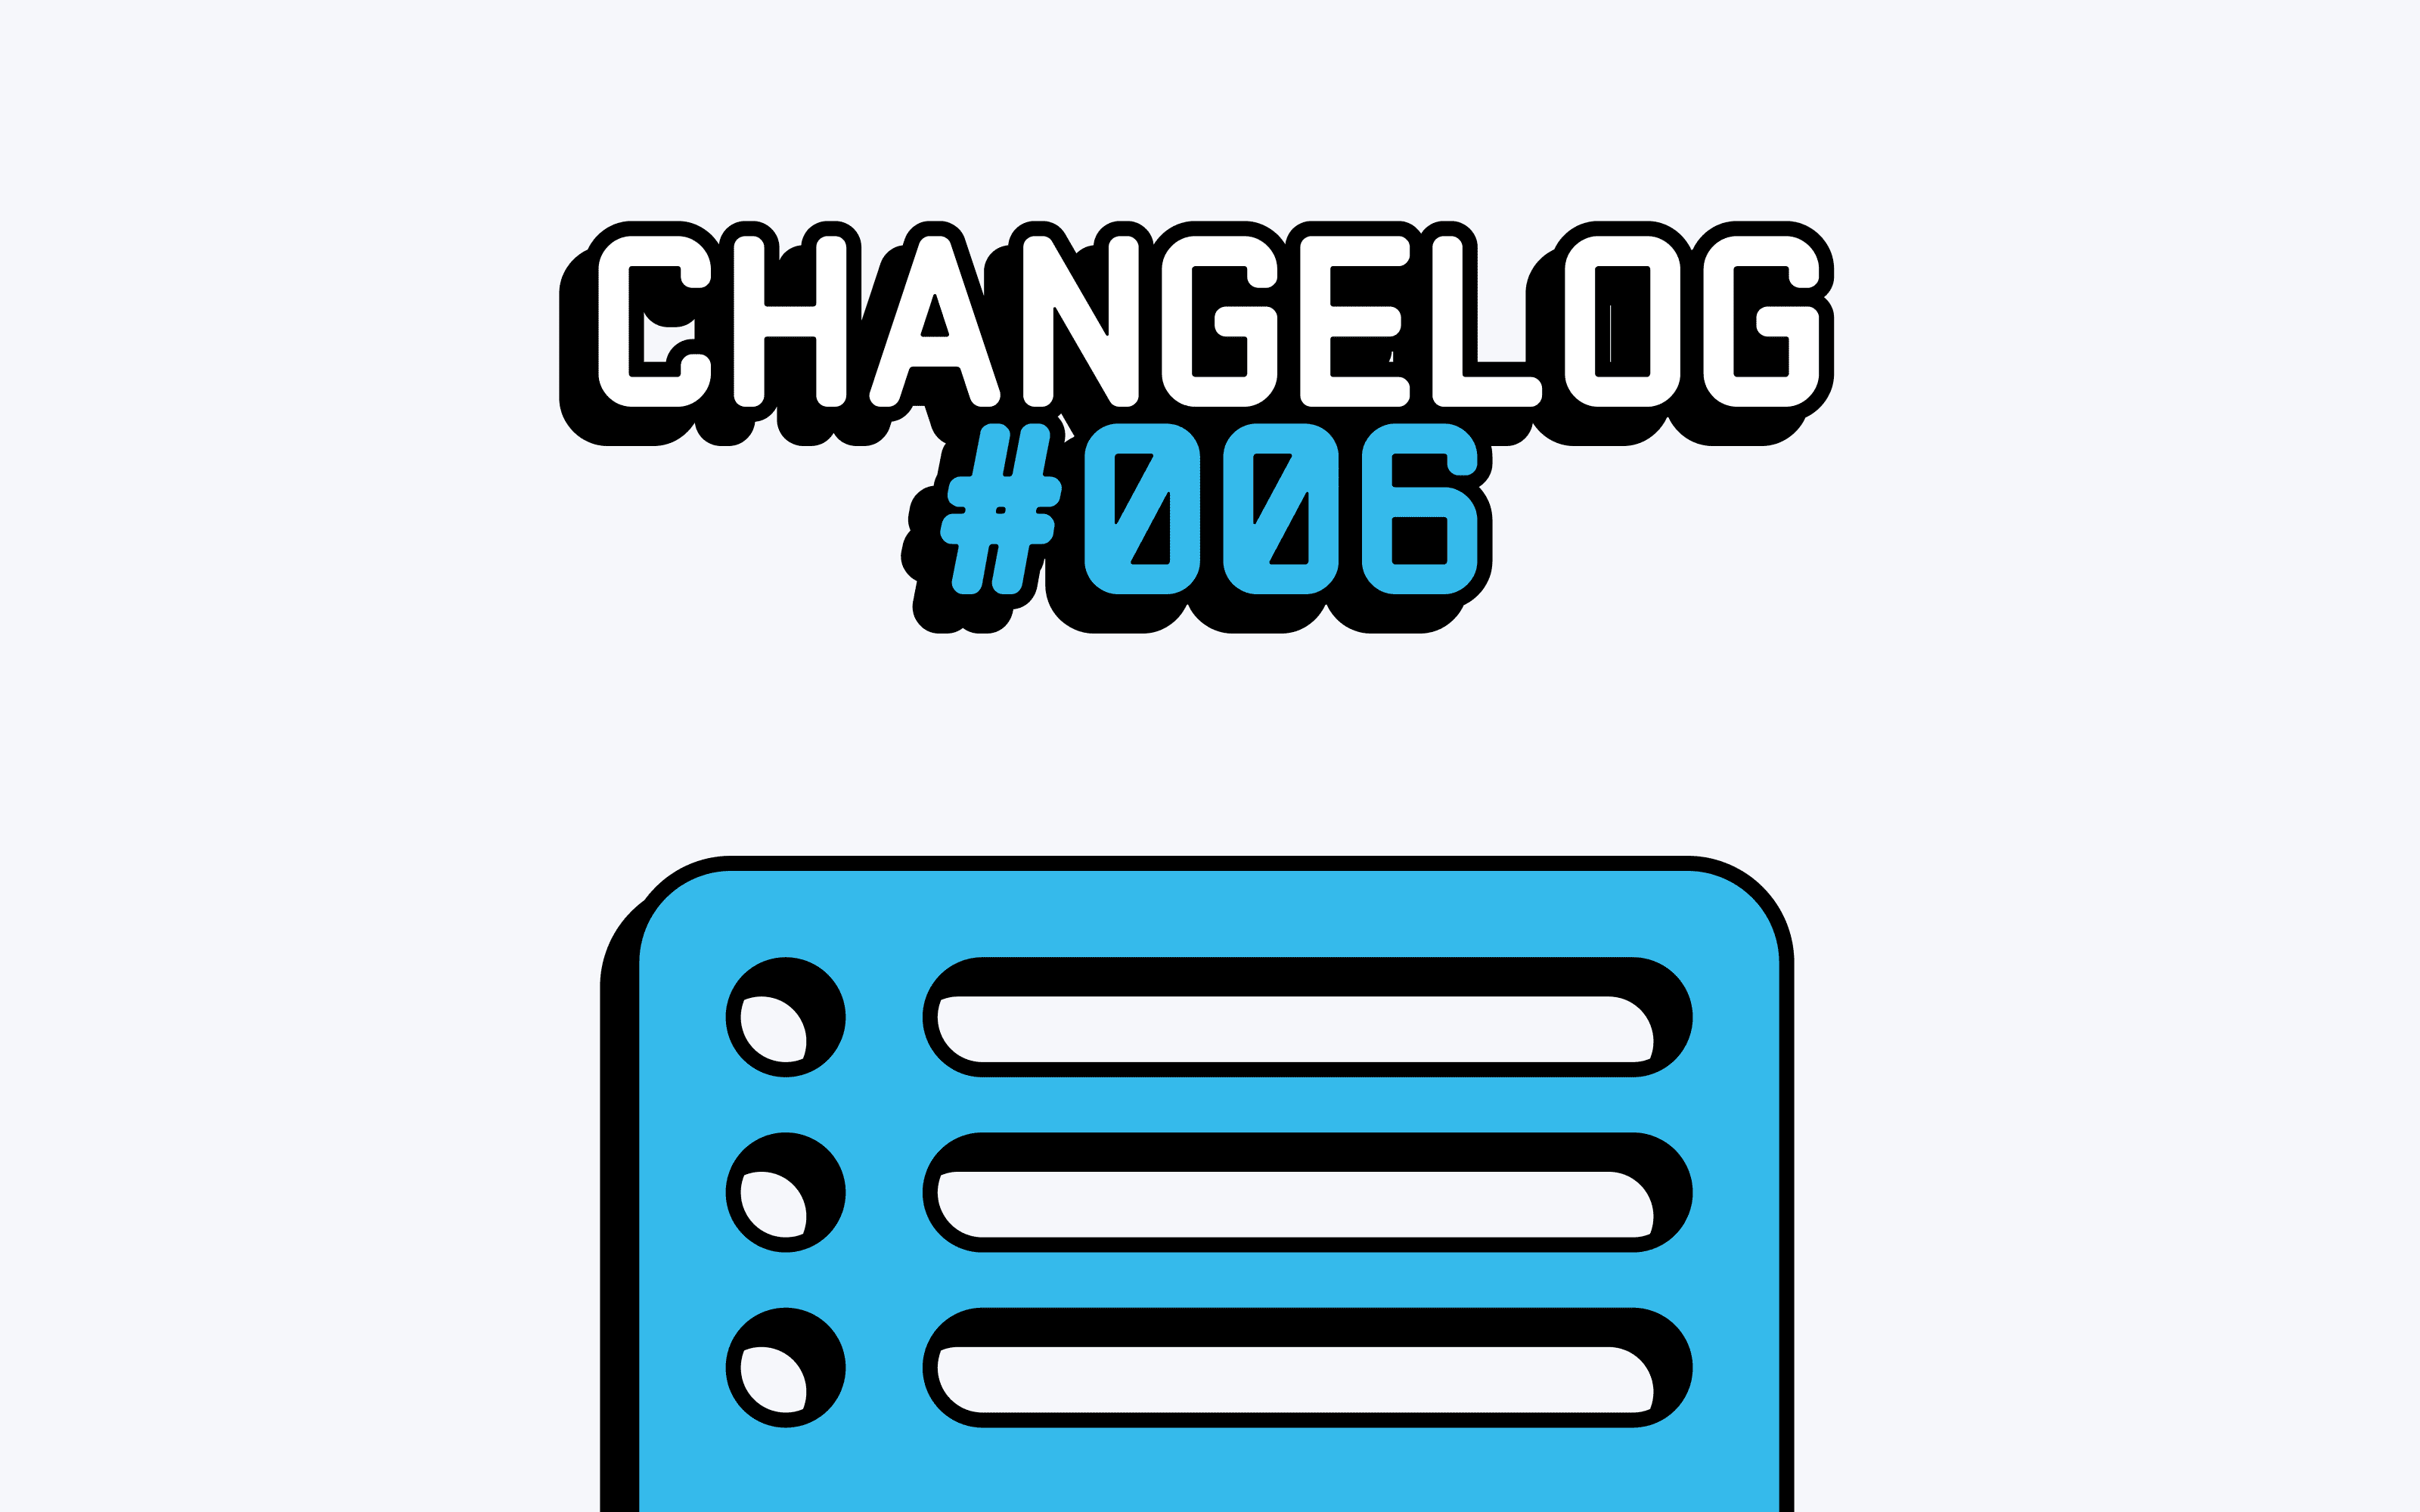 Changelog #006